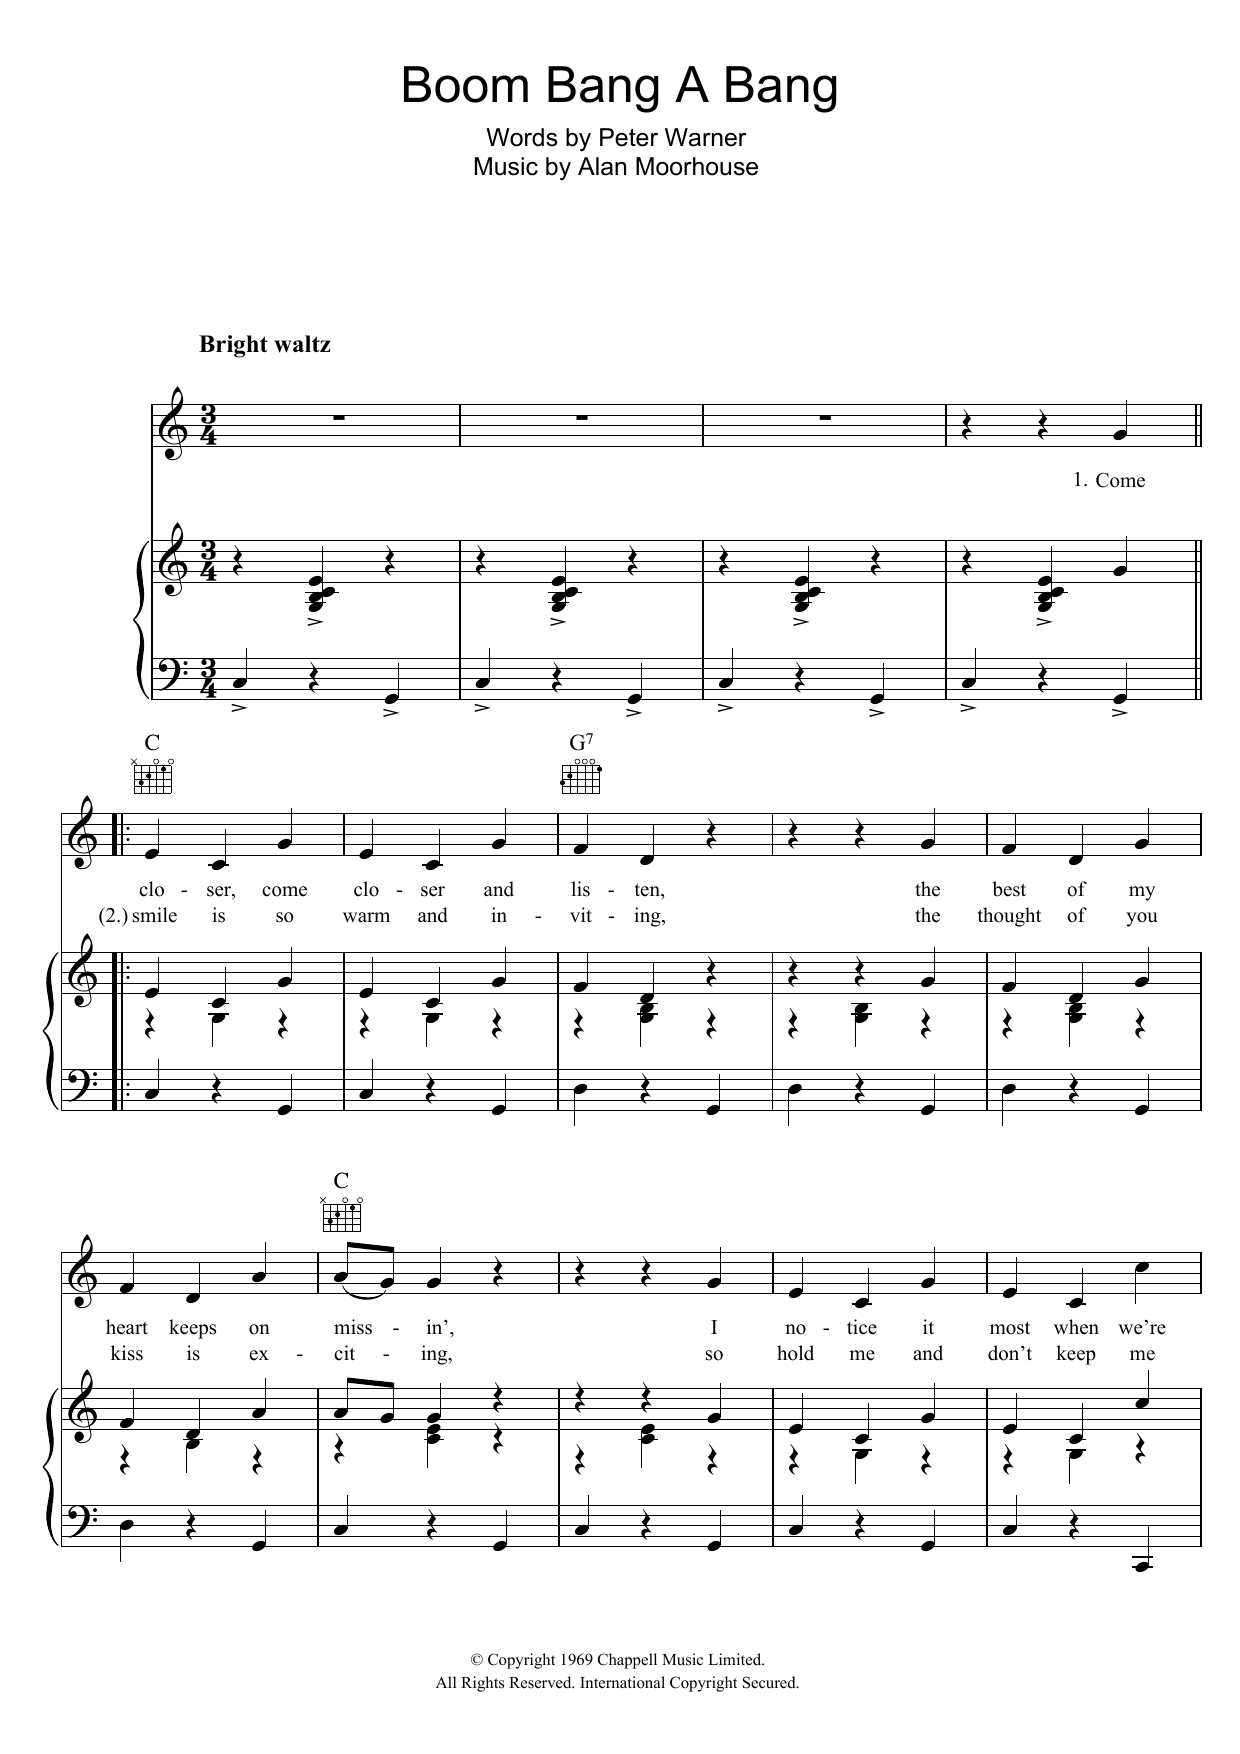 Lulu Boom Bang A Bang Sheet Music Notes & Chords for Piano, Vocal & Guitar (Right-Hand Melody) - Download or Print PDF